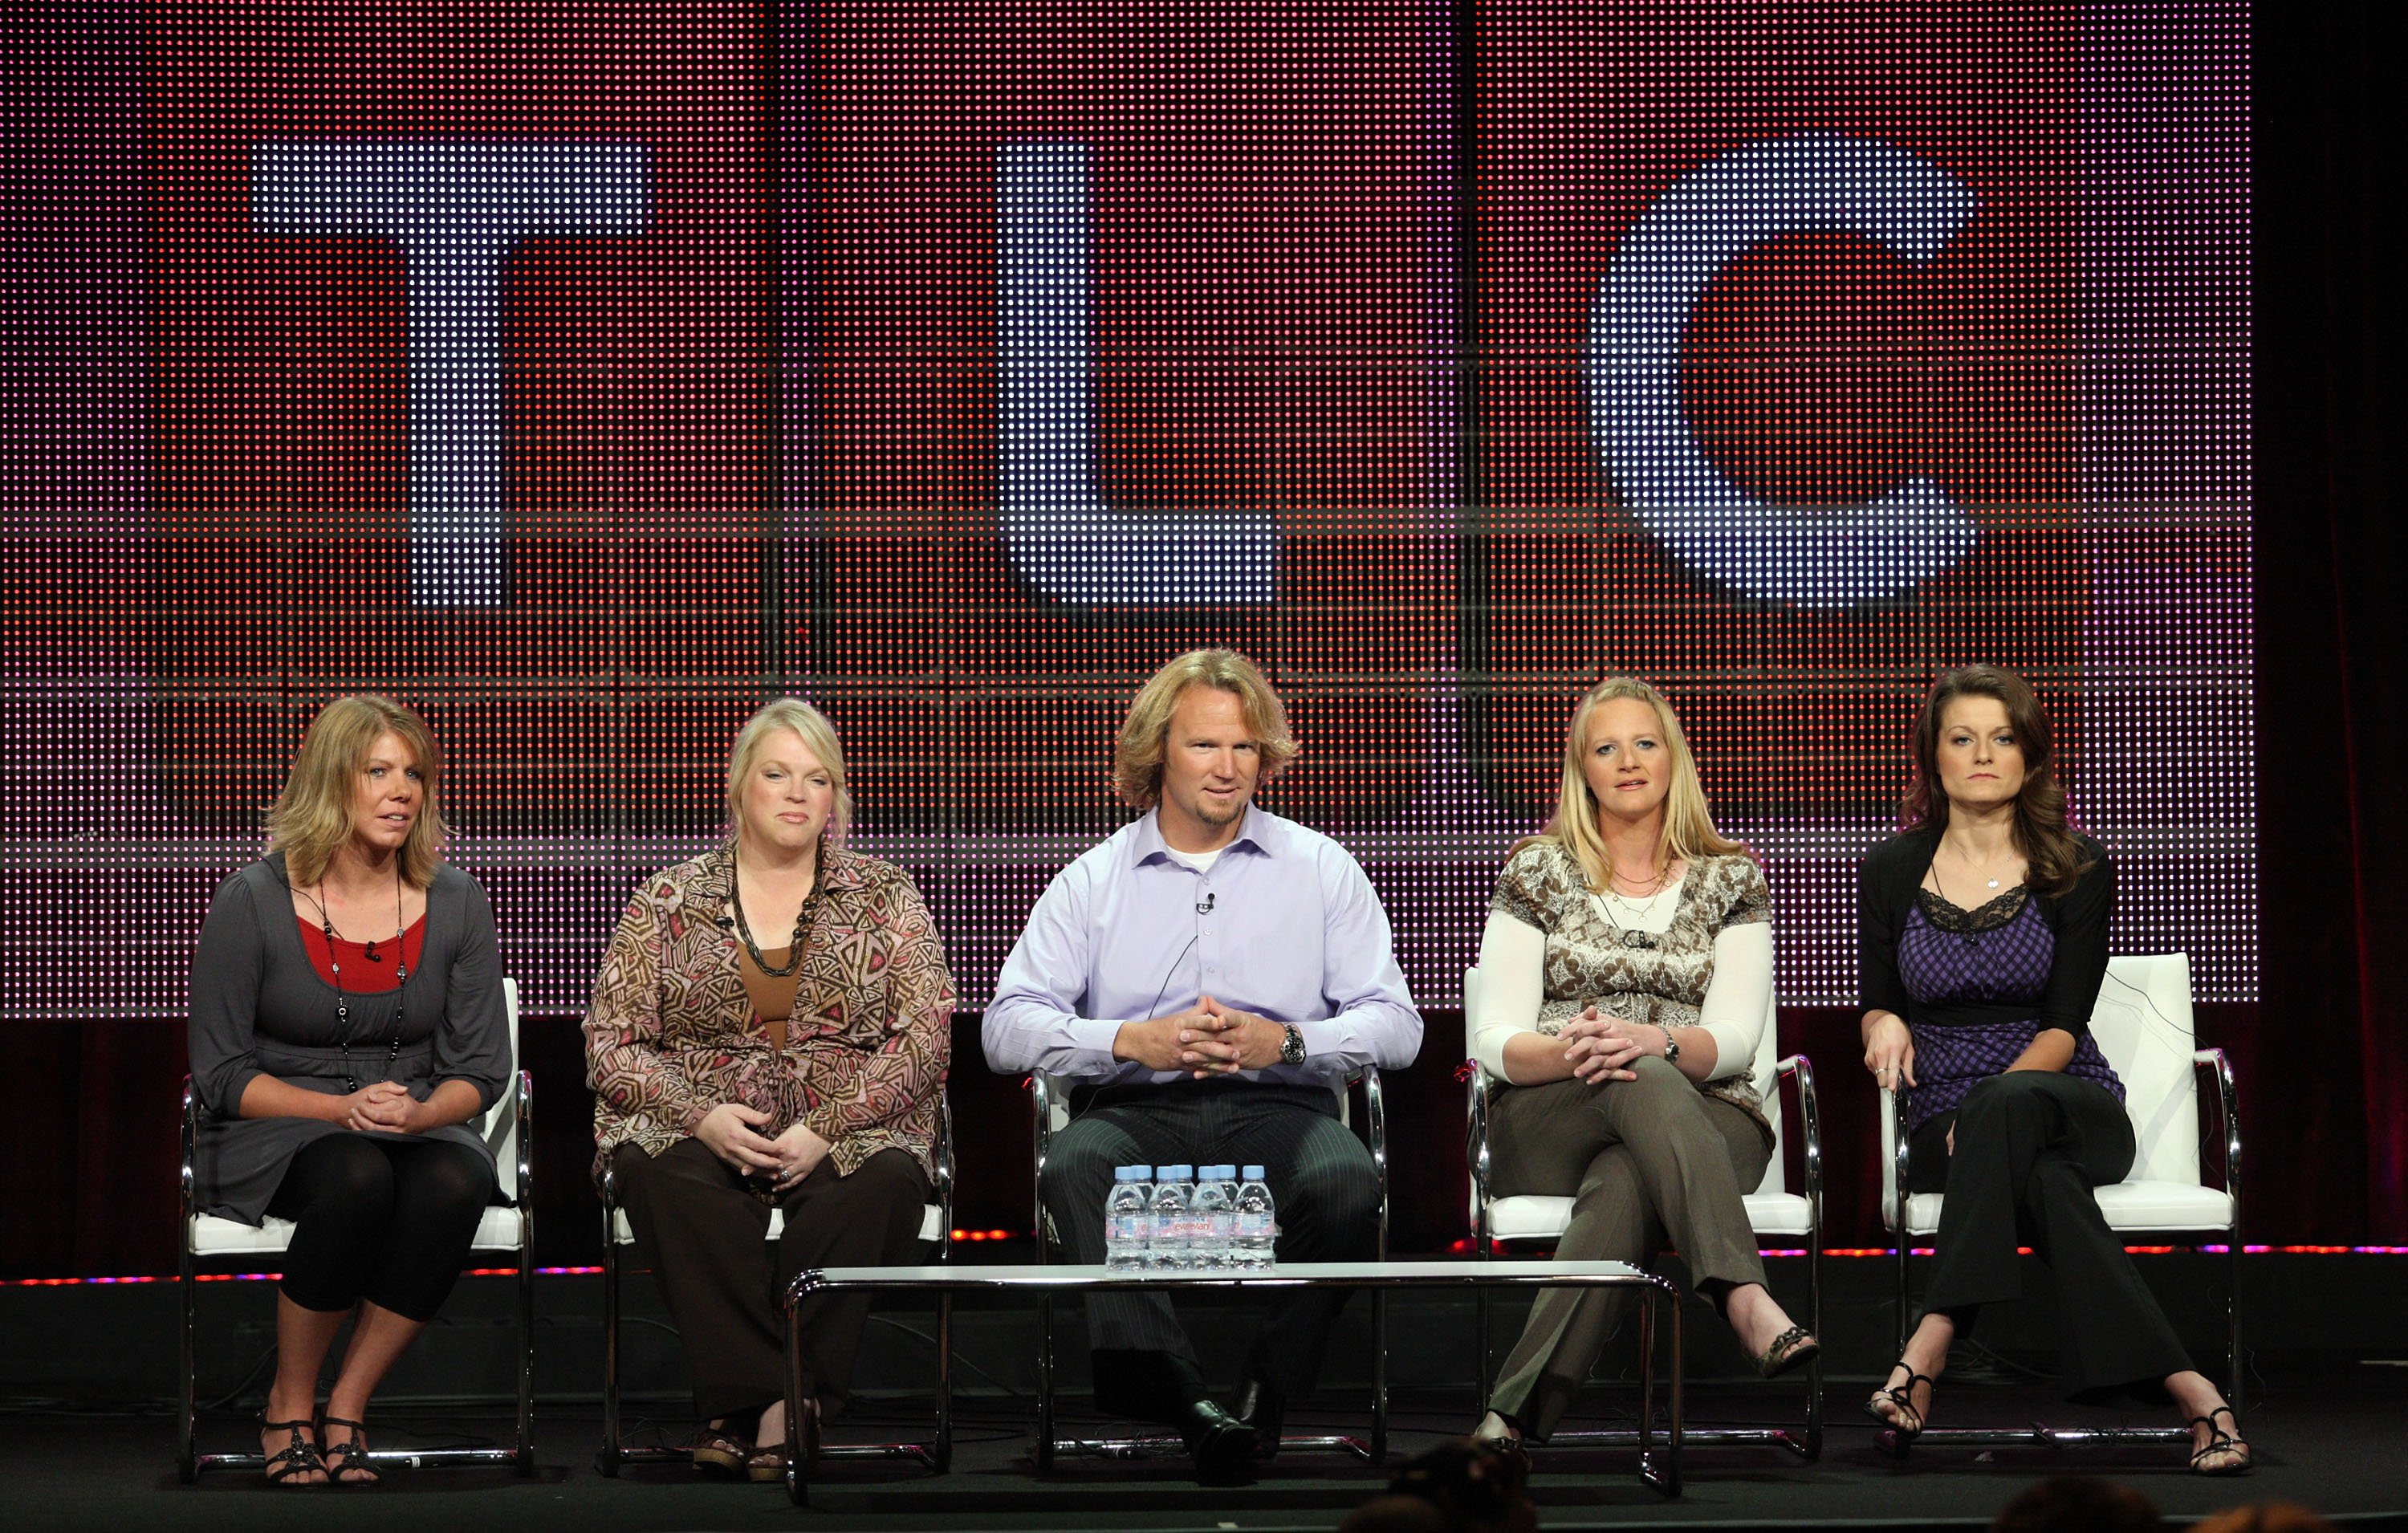 Meri Brwon, Janelle Brown, Kody Brown, Christine Brown and Robyn Brown speak during a panel in 2010